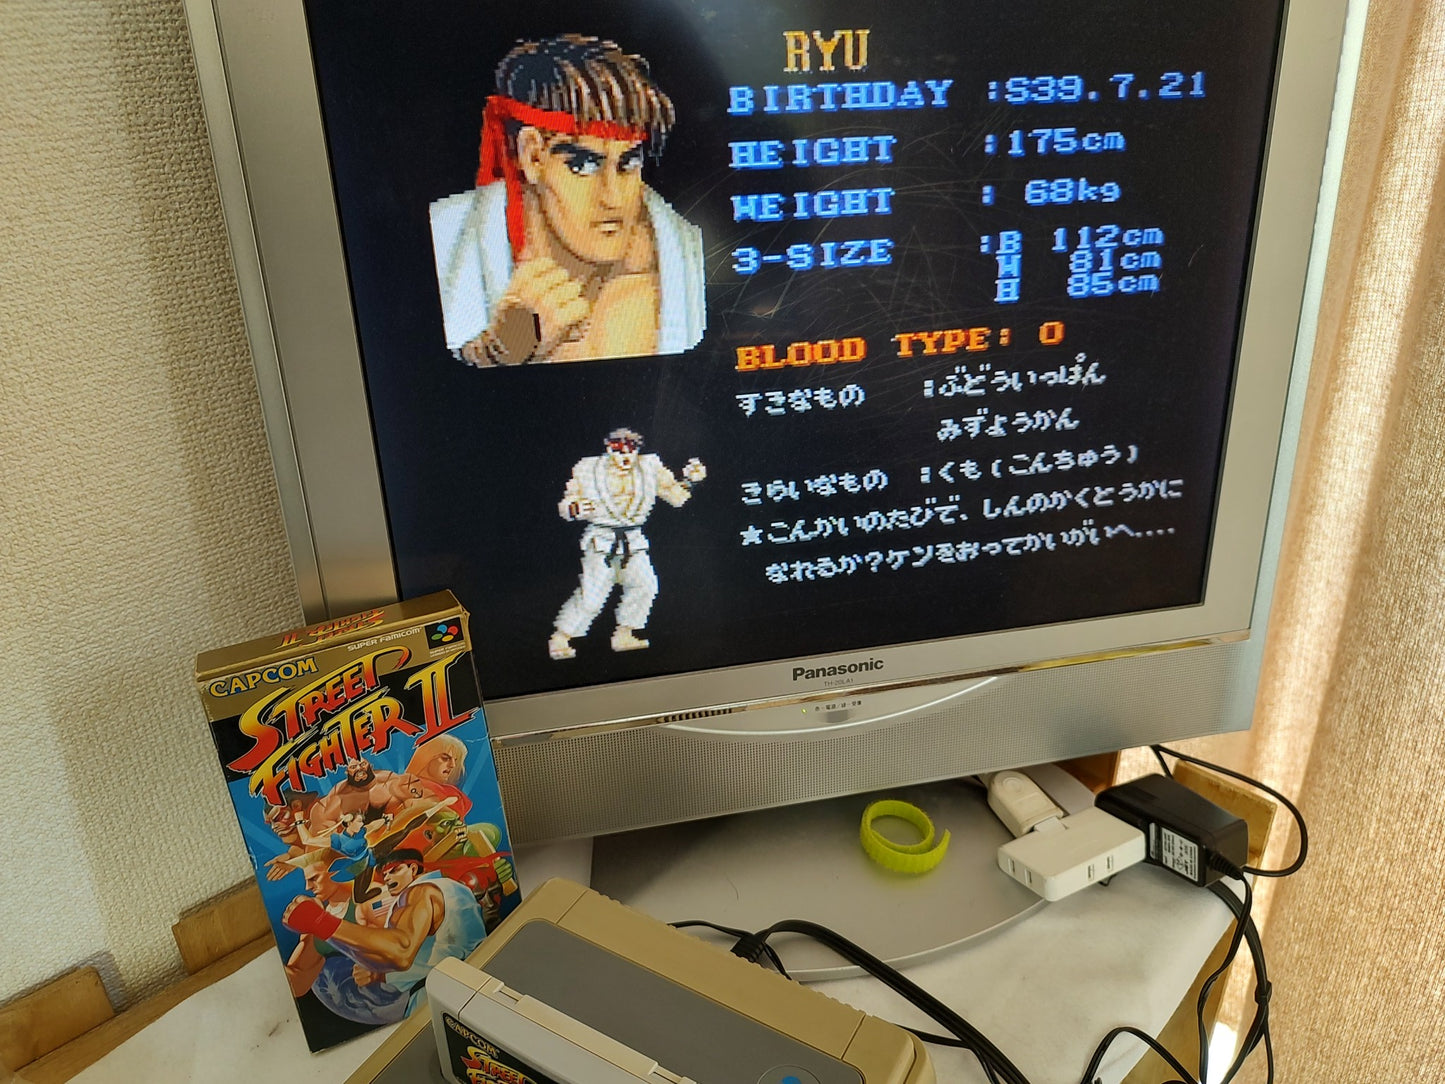 Street Fighter 2 Nintendo Super Famicom Game Cartridge w/Manual, Box set-f0505-